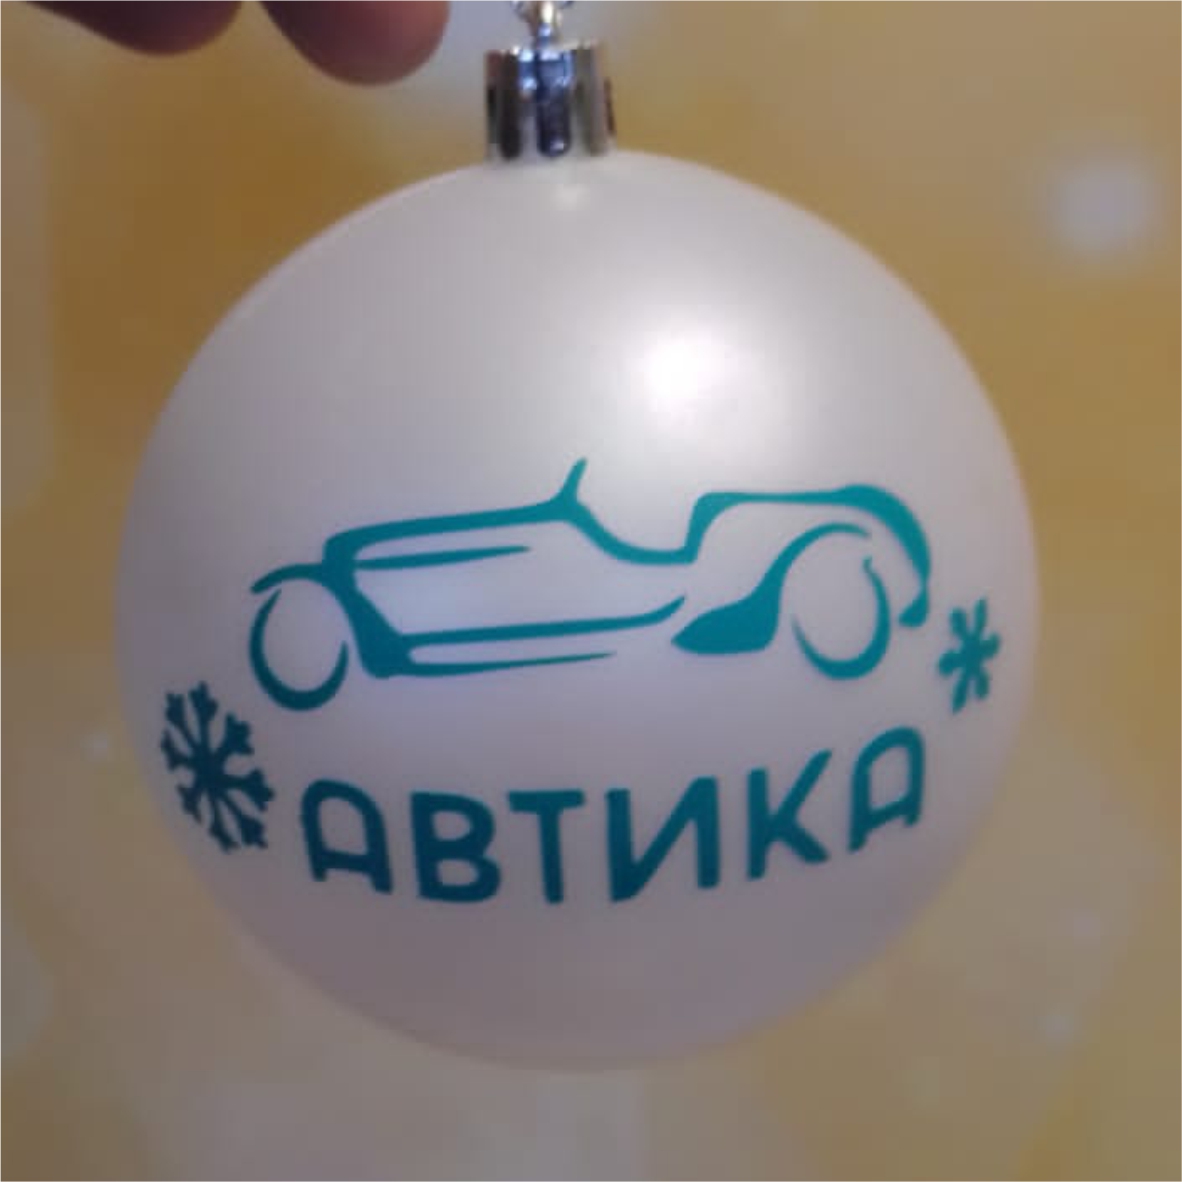 Печать логотипа для Автика